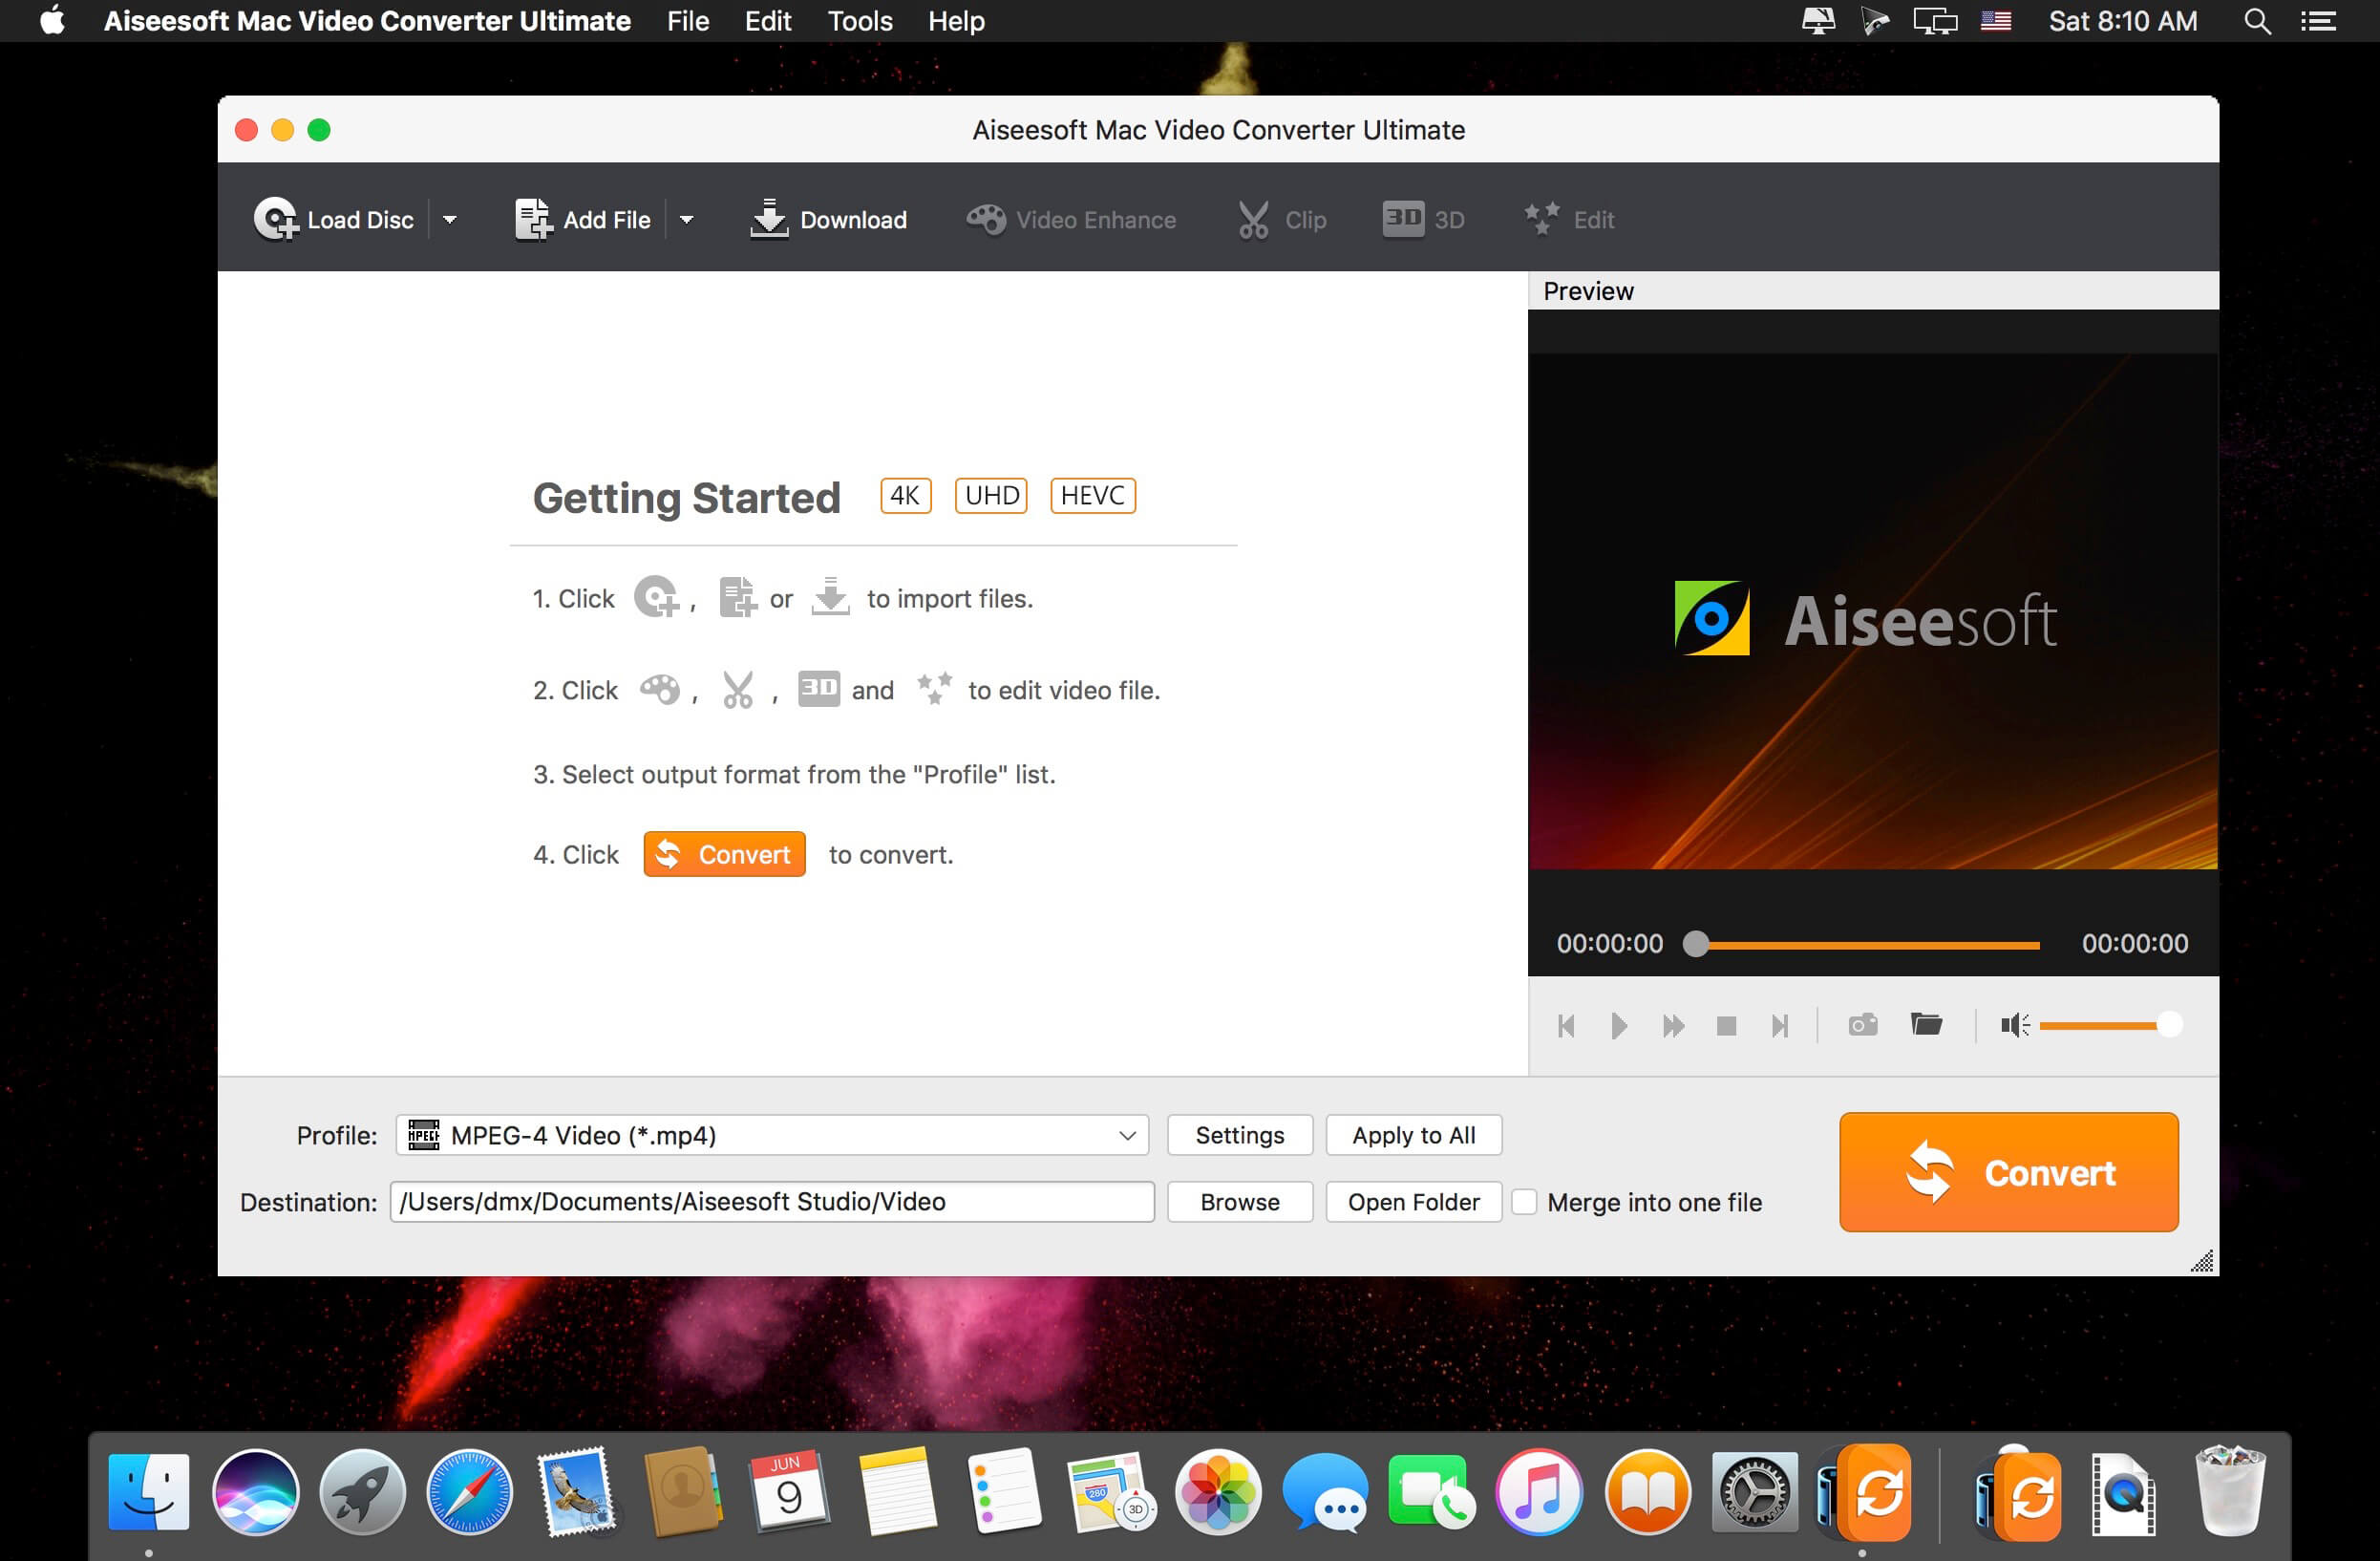 download Aiseesoft Video Enhancer 9.2.58 free